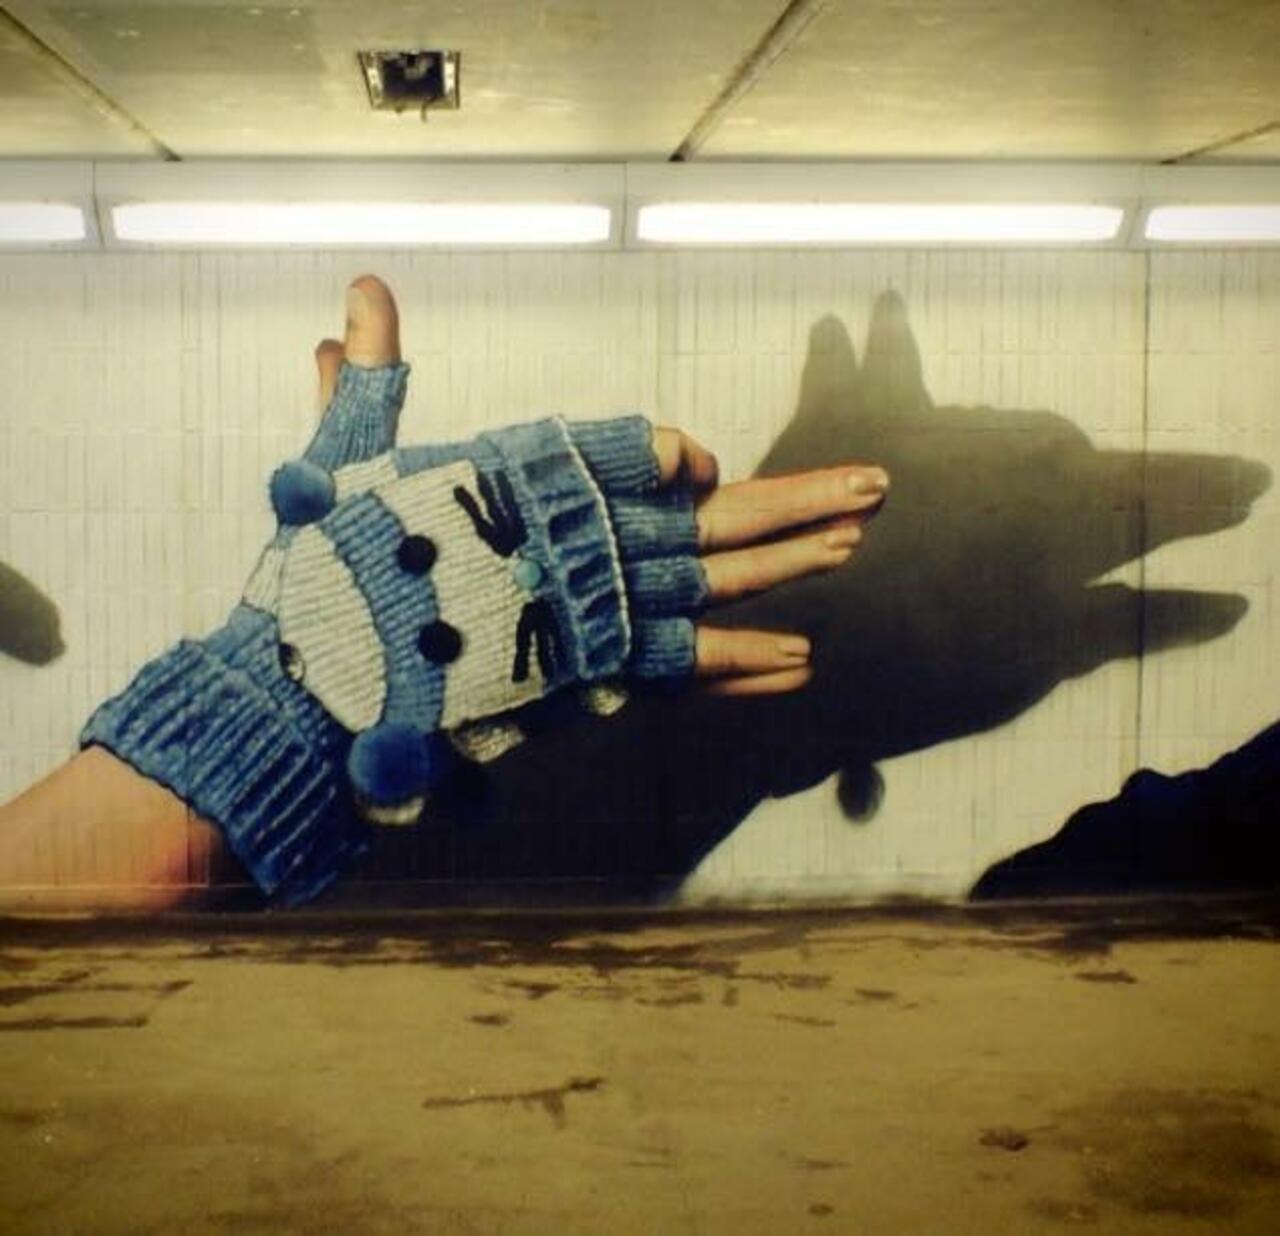 Case maclaim passion for #streetart #graffiti #urbanart #murales #mural #stencil http://t.co/AUWM7vWdJF